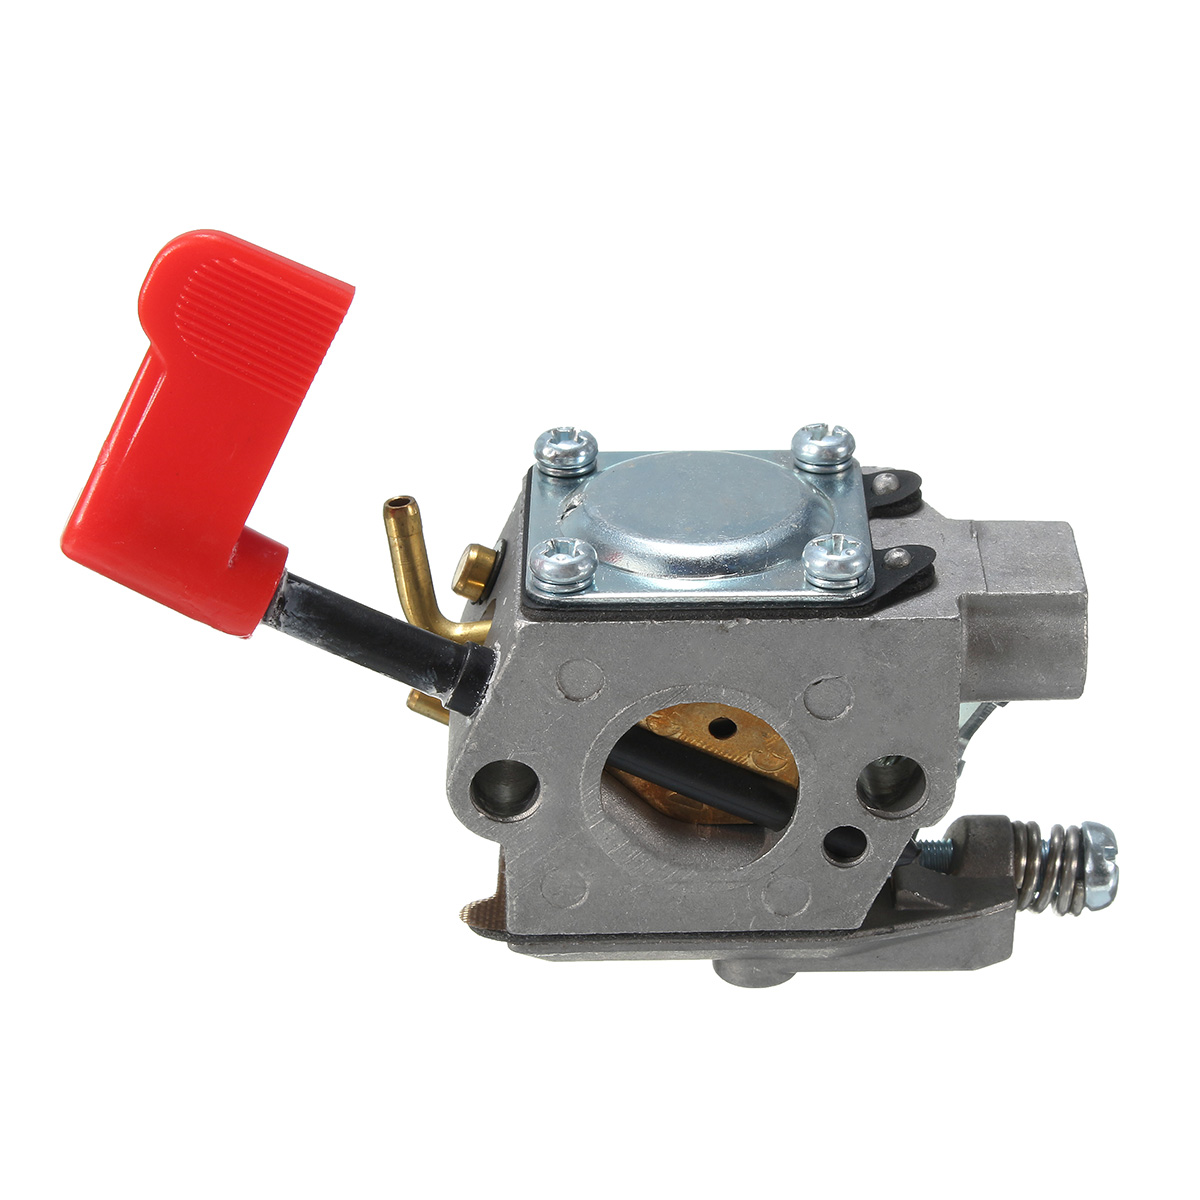 Carburetor Repair Kit for Craftsman Poulan 32Cc Gas Trimmer Pruner Walbro WT-628 - Auto GoShop